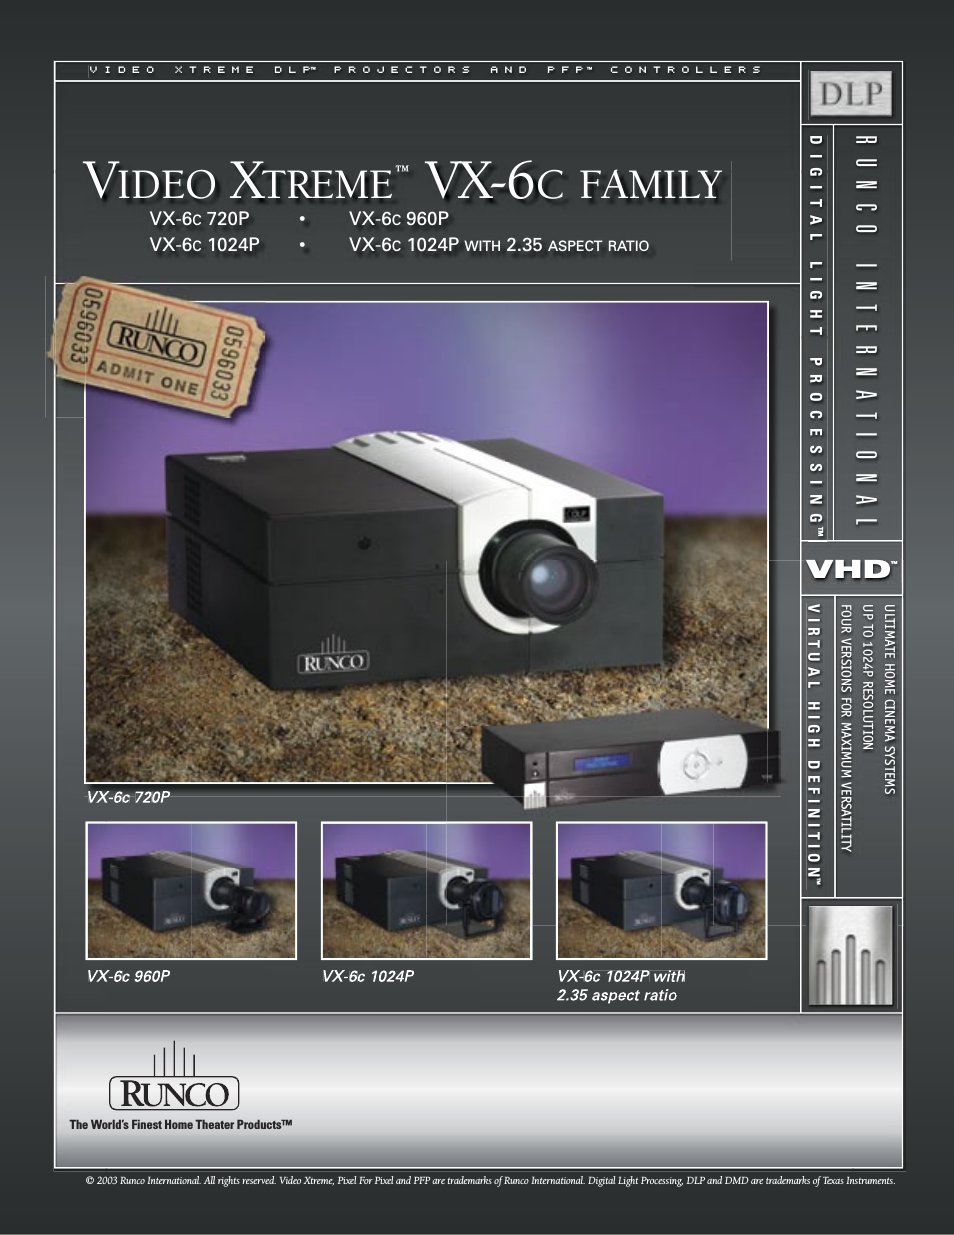 VIDEO XTREME VX-6c 720P